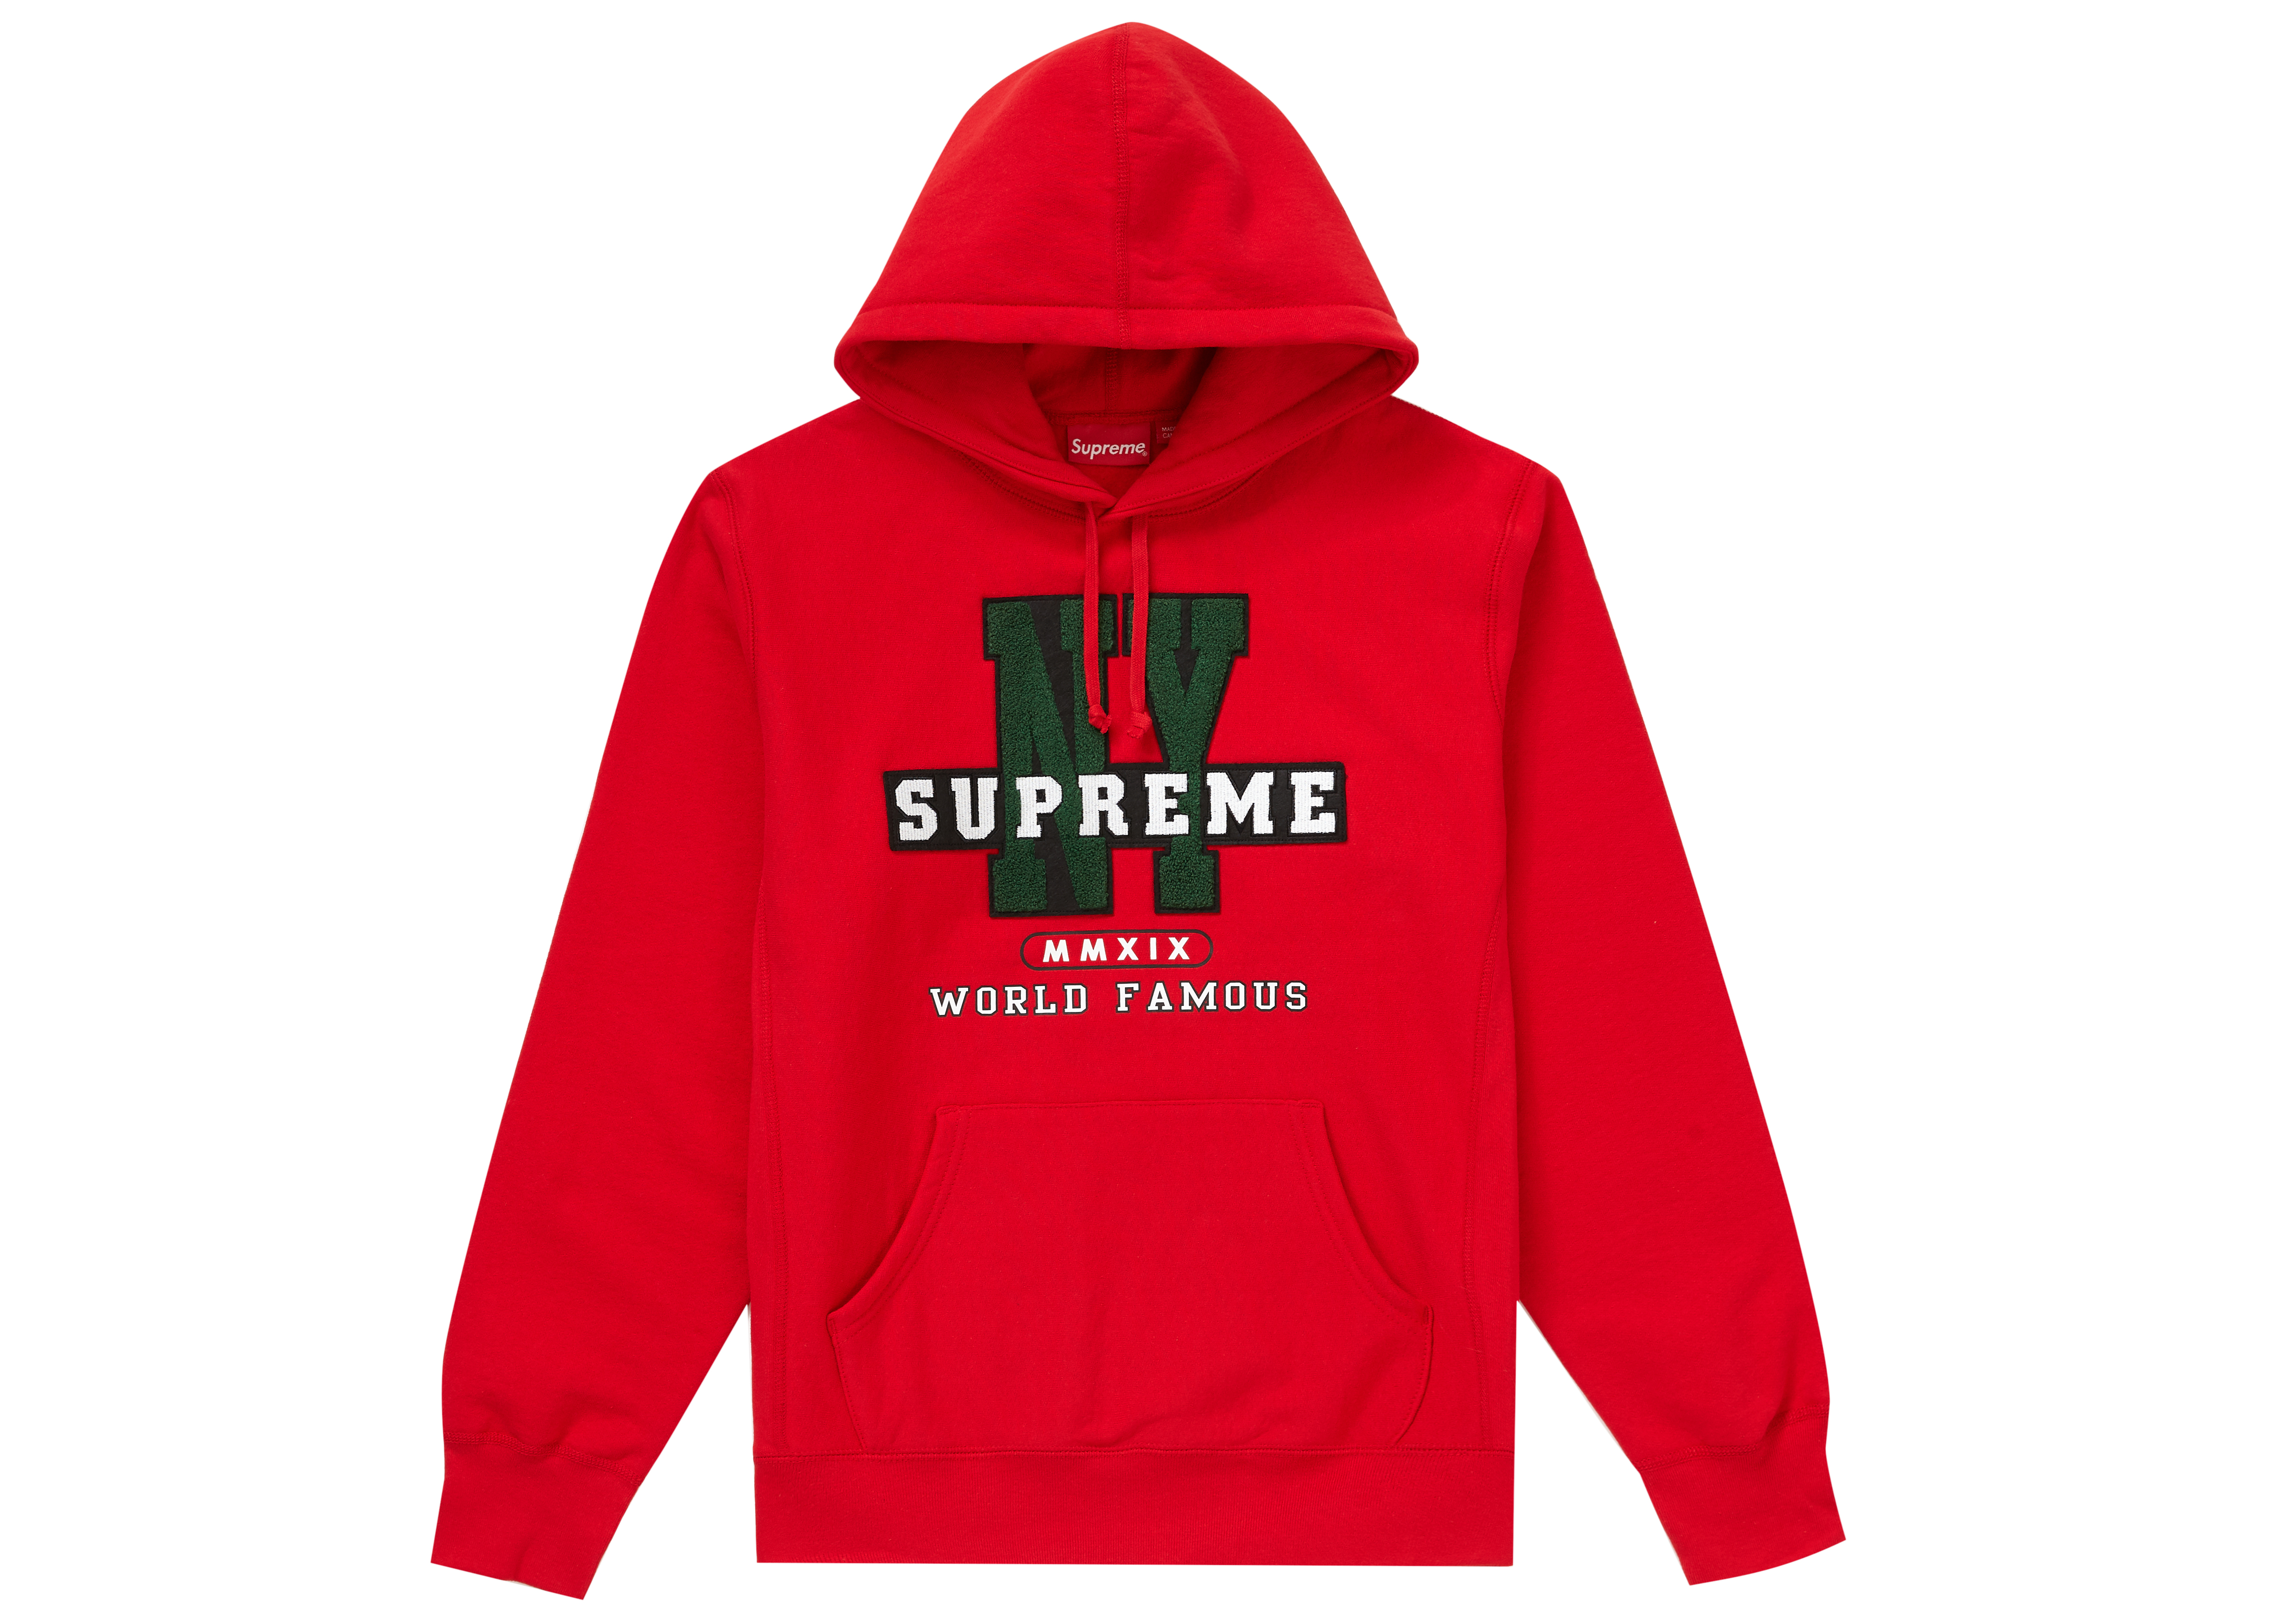 Supreme NY hooded